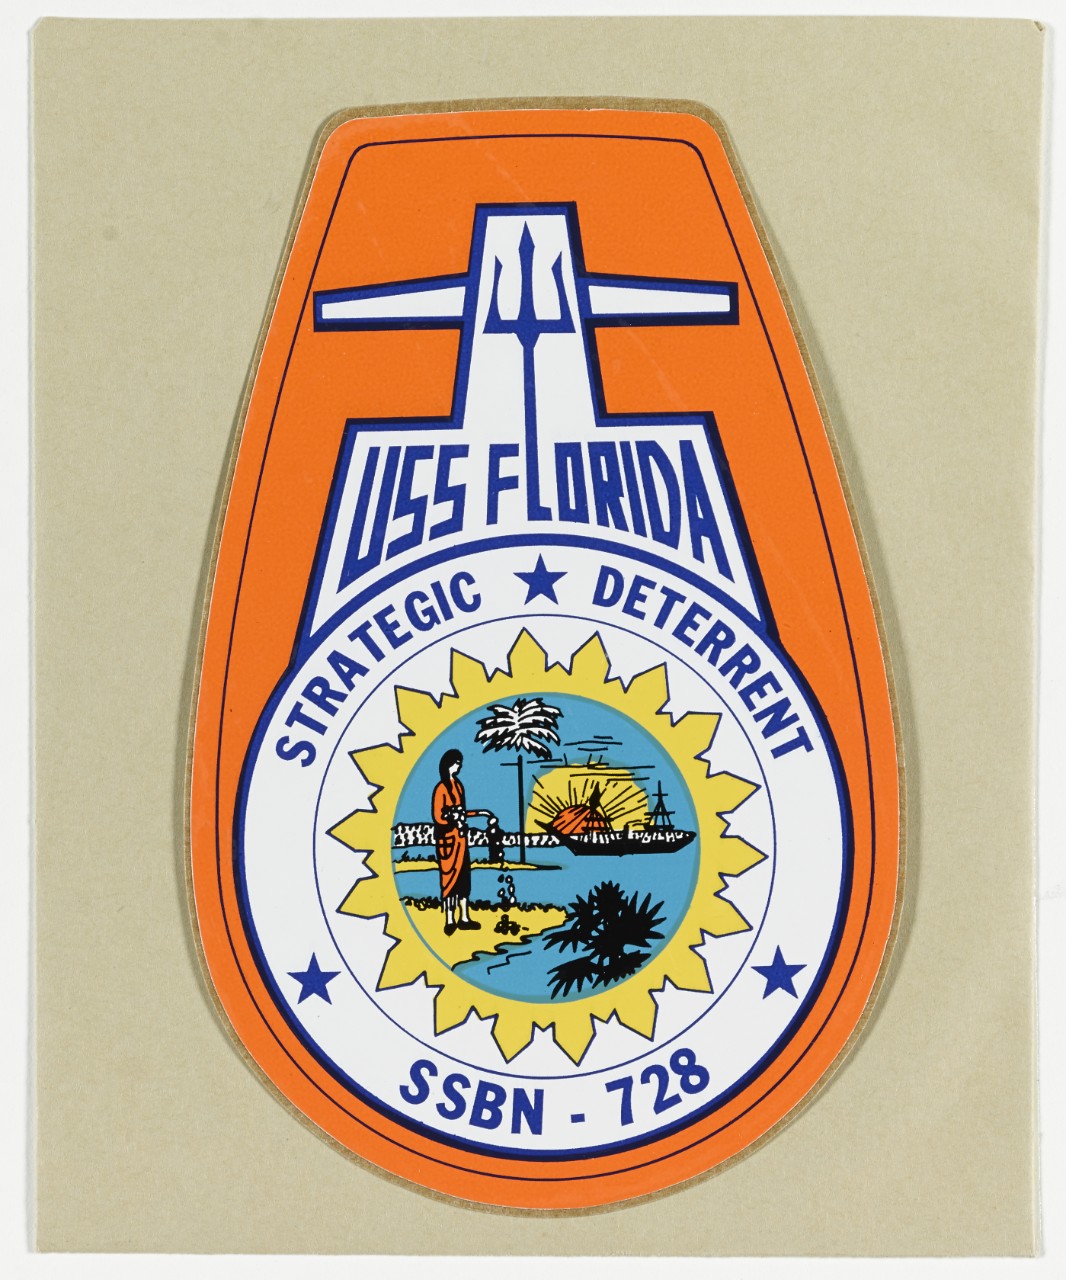 USS FLORIDA (SSBN-728)